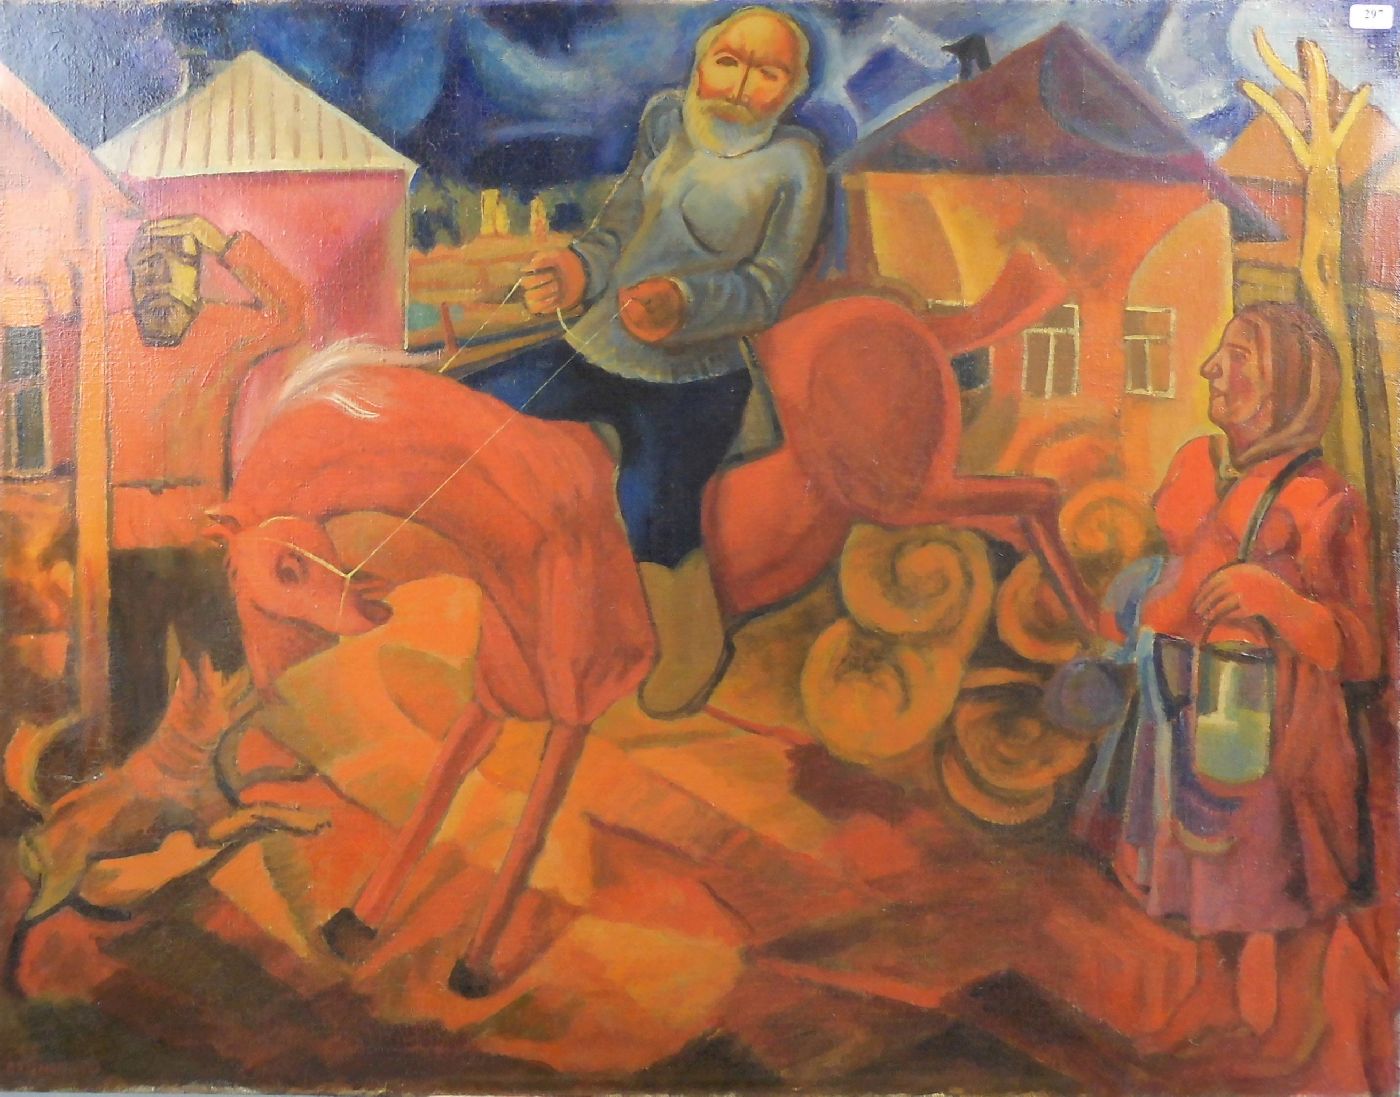 PALMOV, VIKTOR NIKRANOROVITCH (1888-1929), Gemälde: "Reiterszene", Öl auf Leinwand, u. l. signiert